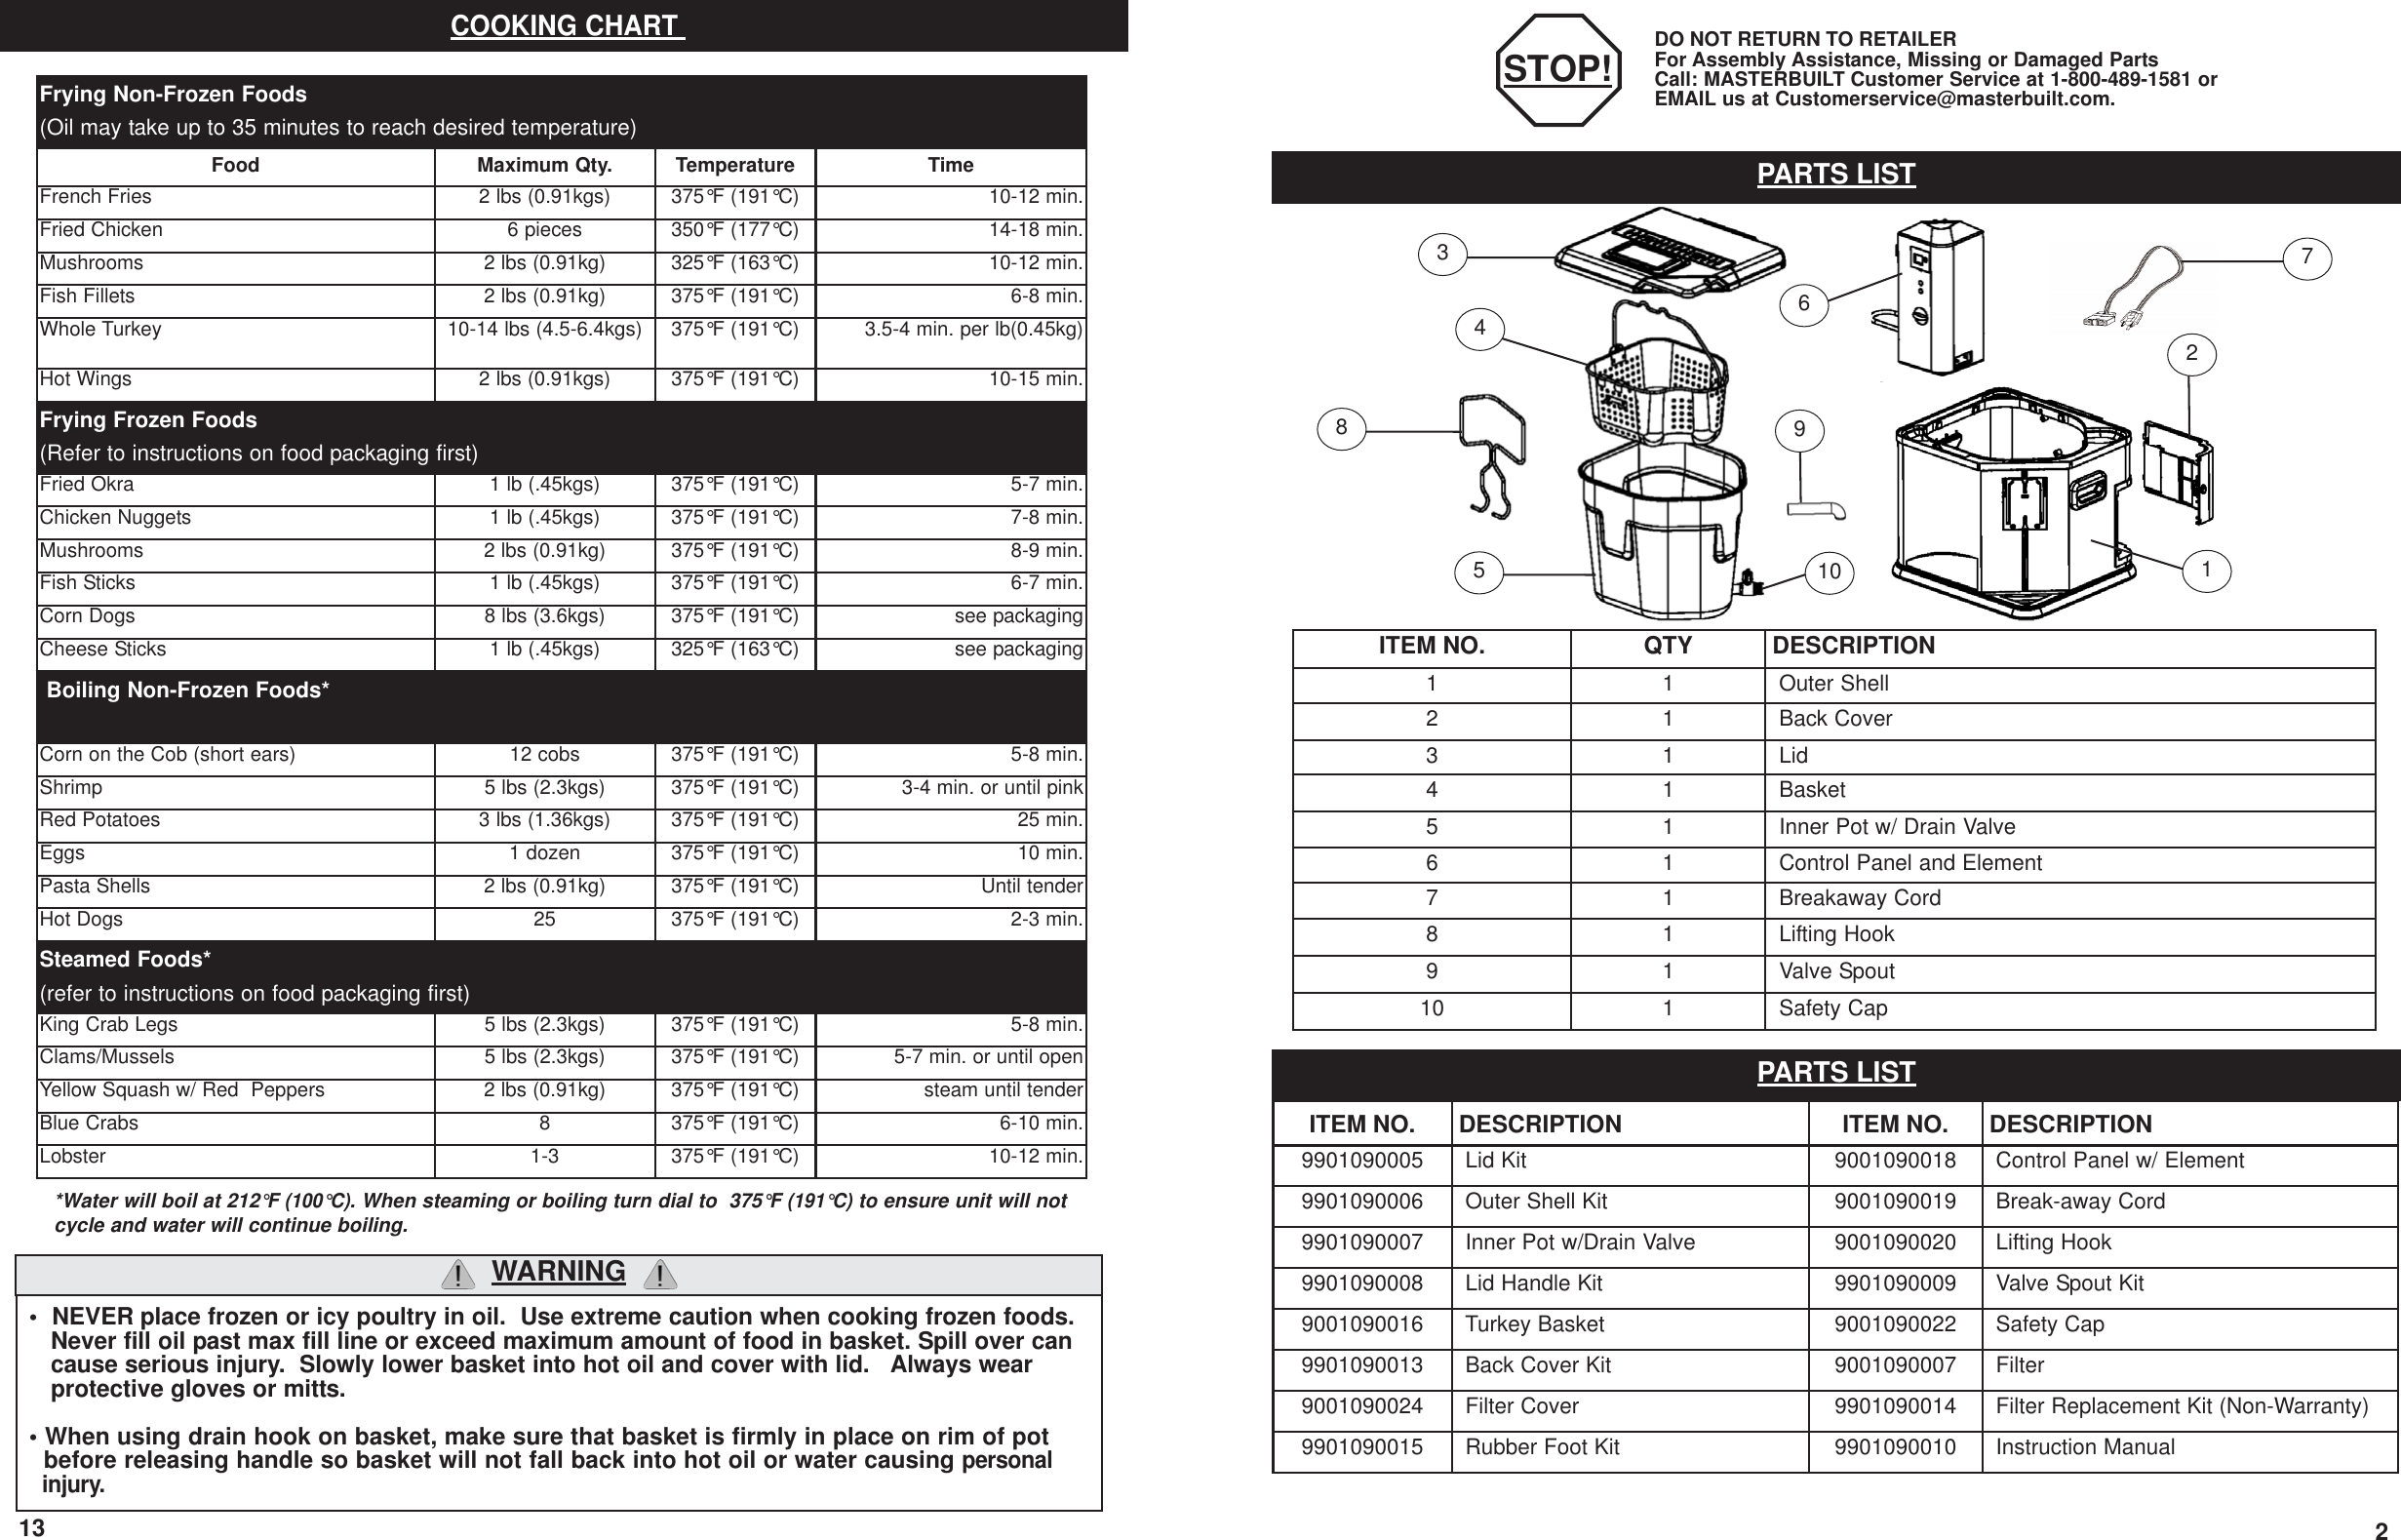 Page 3 of 8 - Masterbuilt Masterbuilt-Electric-Turkey-Fryer-20010109-Users-Manual- 090623 20010109 Manual  Masterbuilt-electric-turkey-fryer-20010109-users-manual